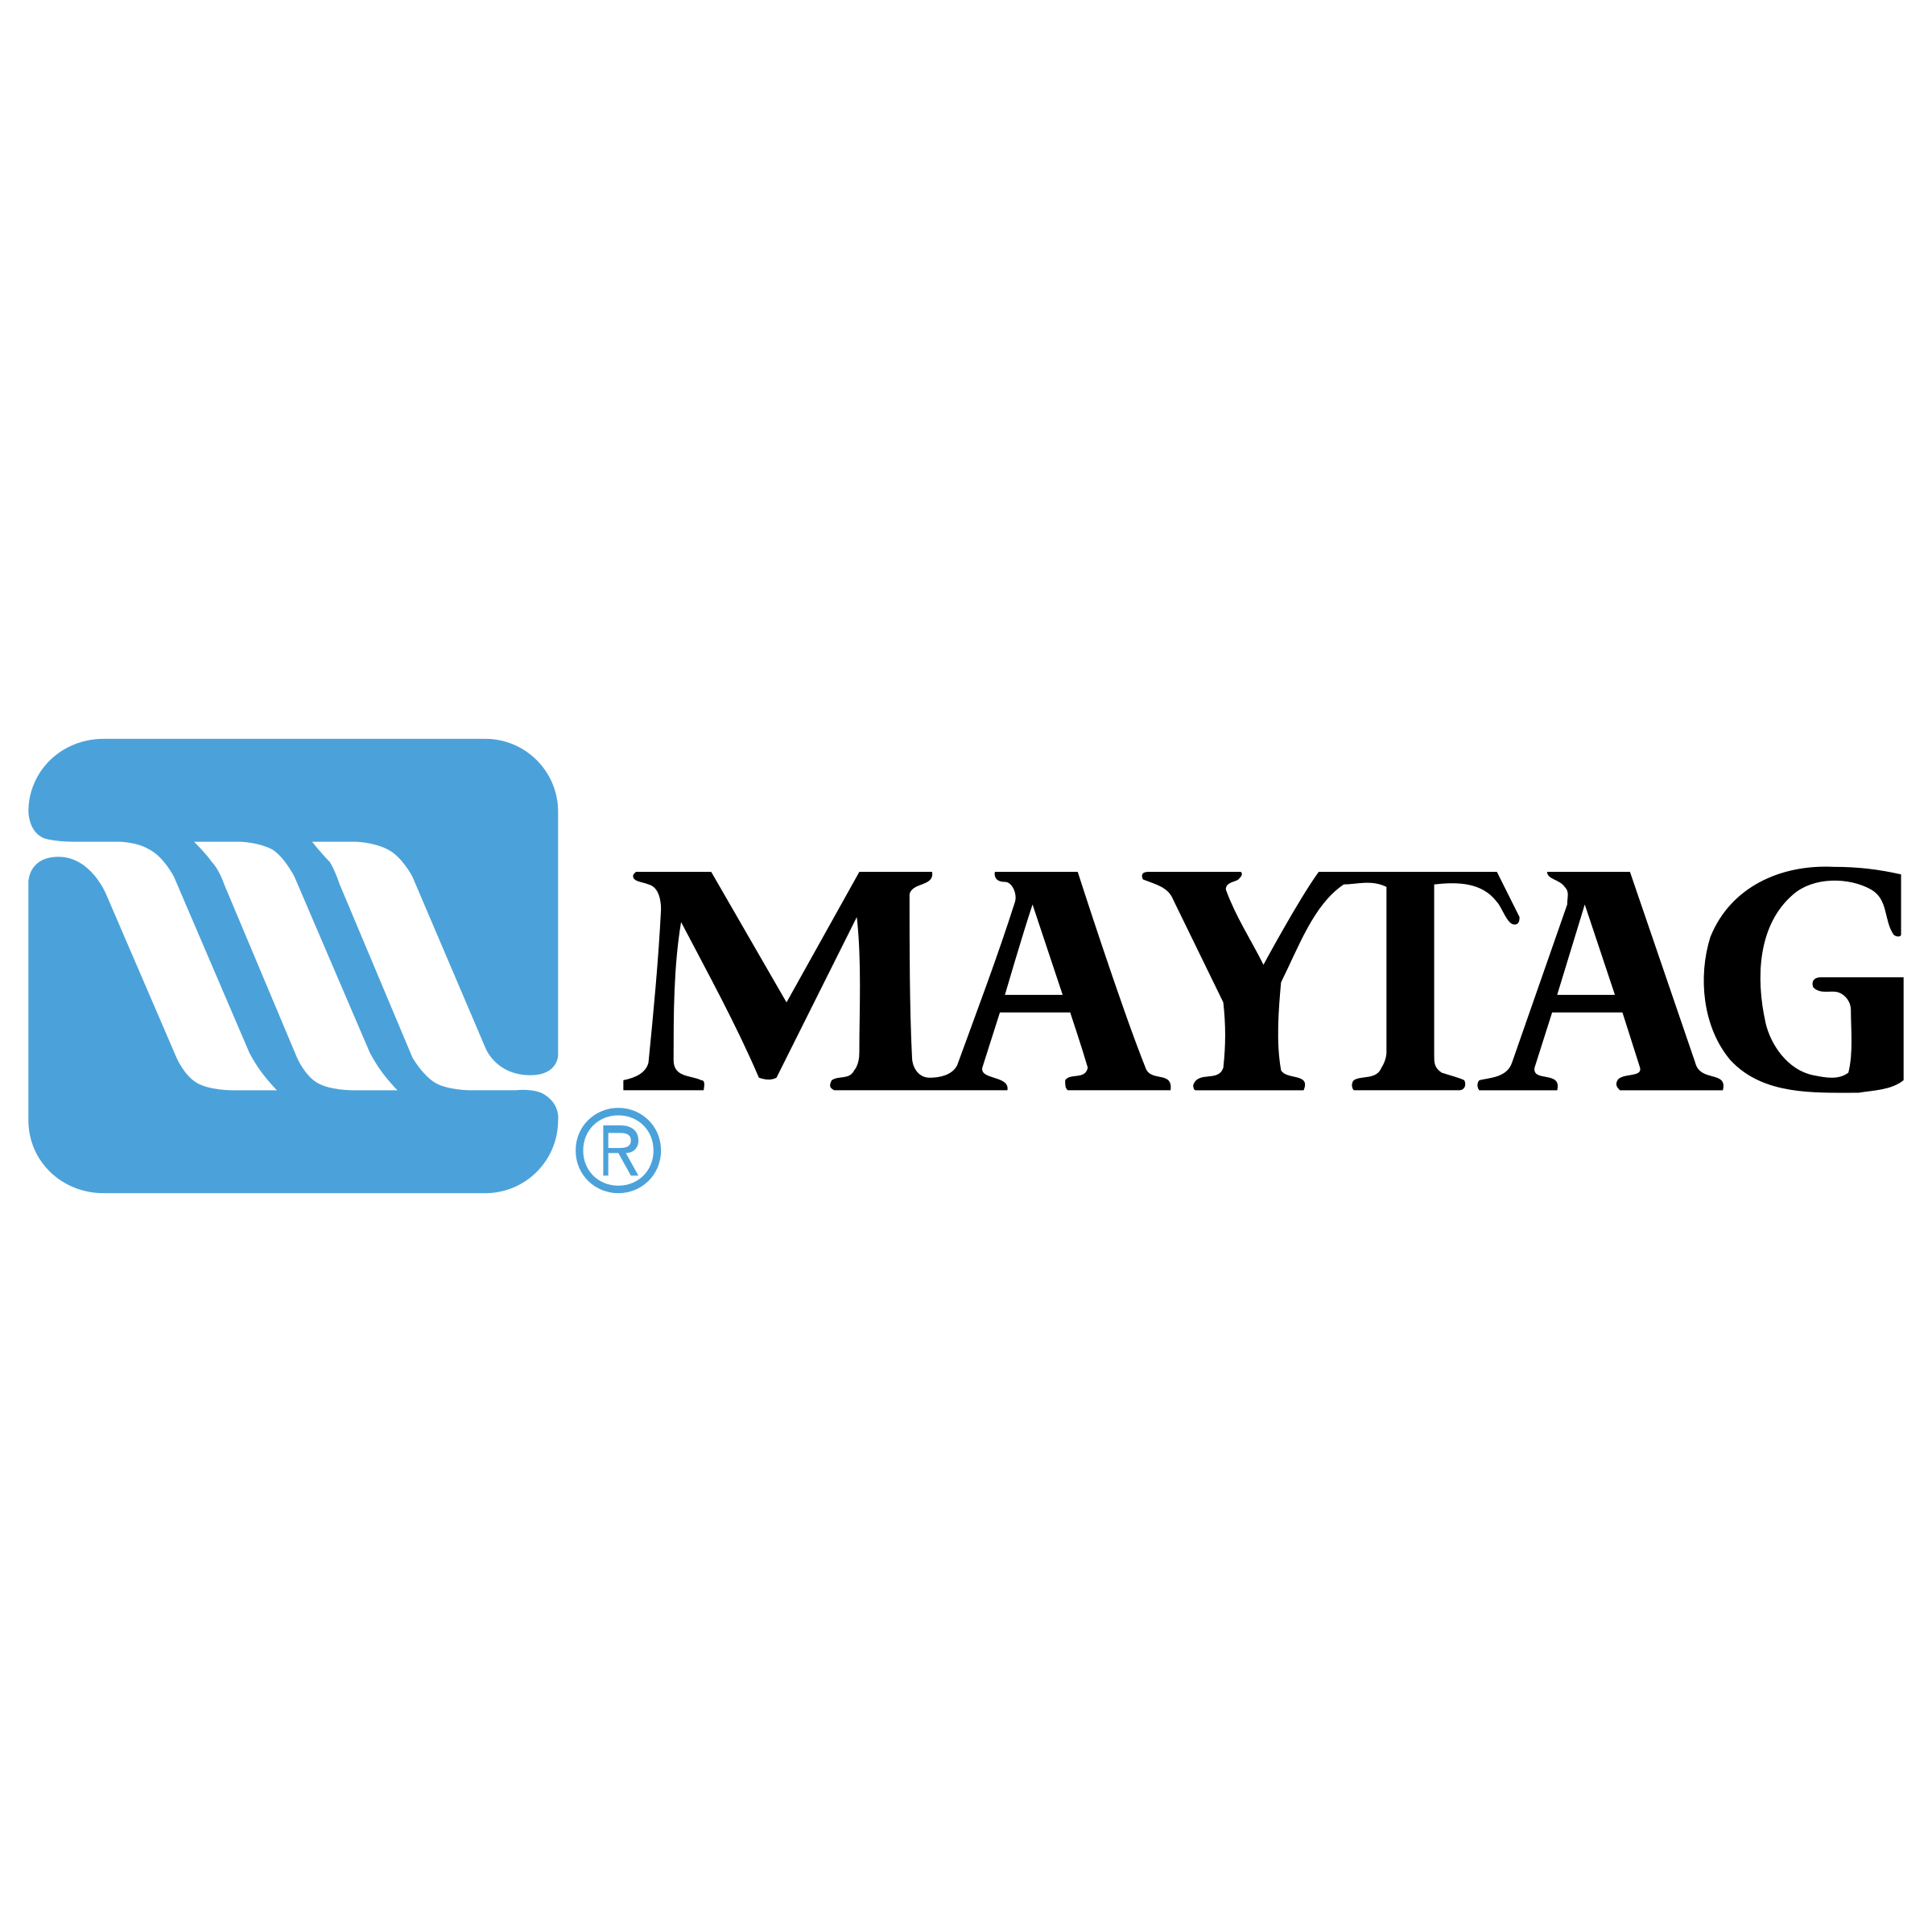 Matag Logo - Maytag Logo PNG Transparent & SVG Vector - Freebie Supply